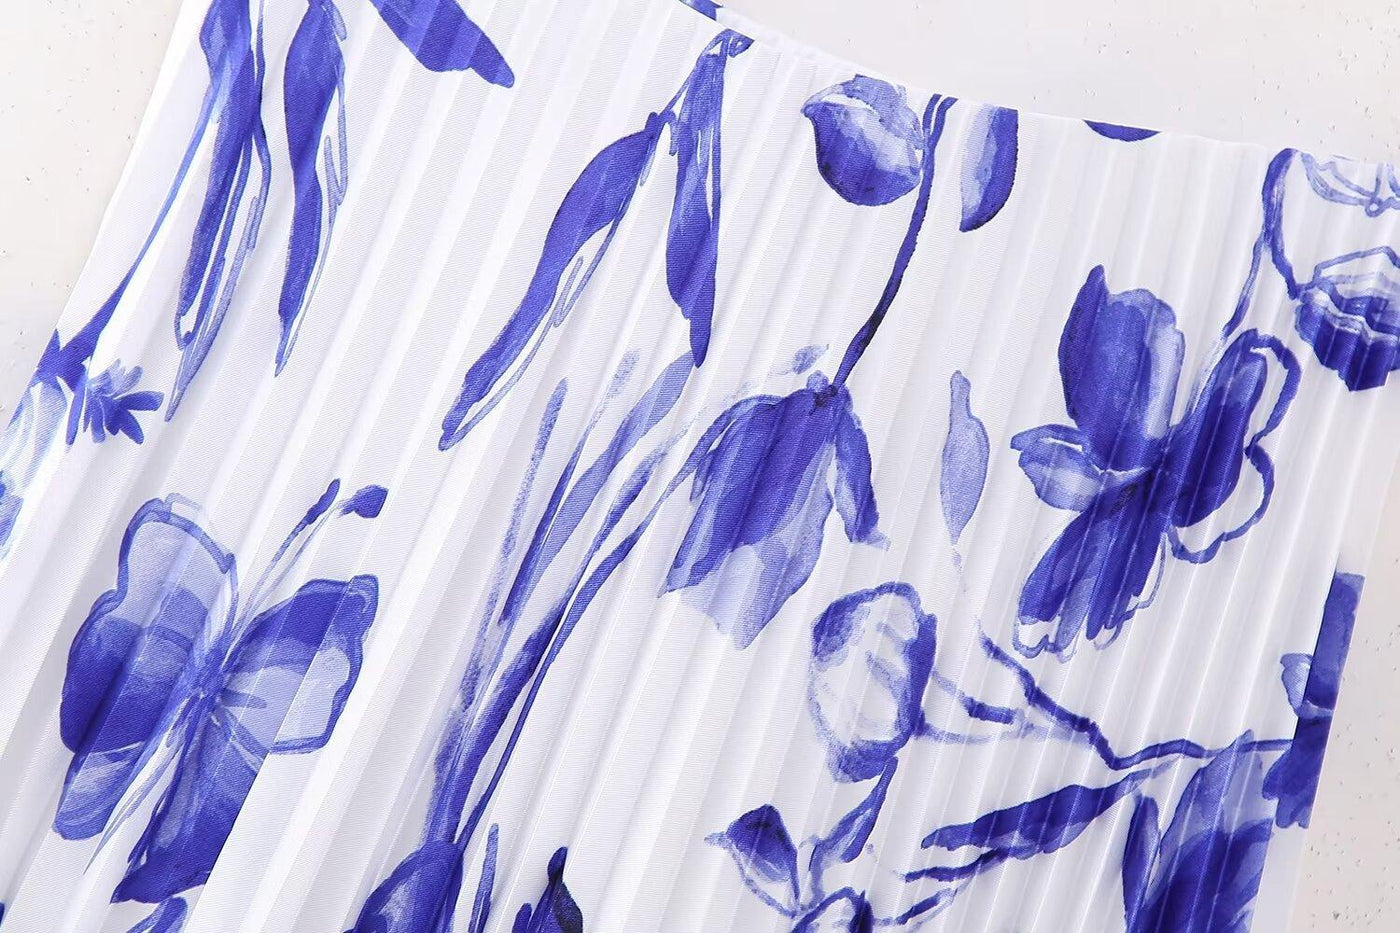 Women's Fashion Long Sleeve Blue Flower Print Shirt Skirt | MODE BY OH